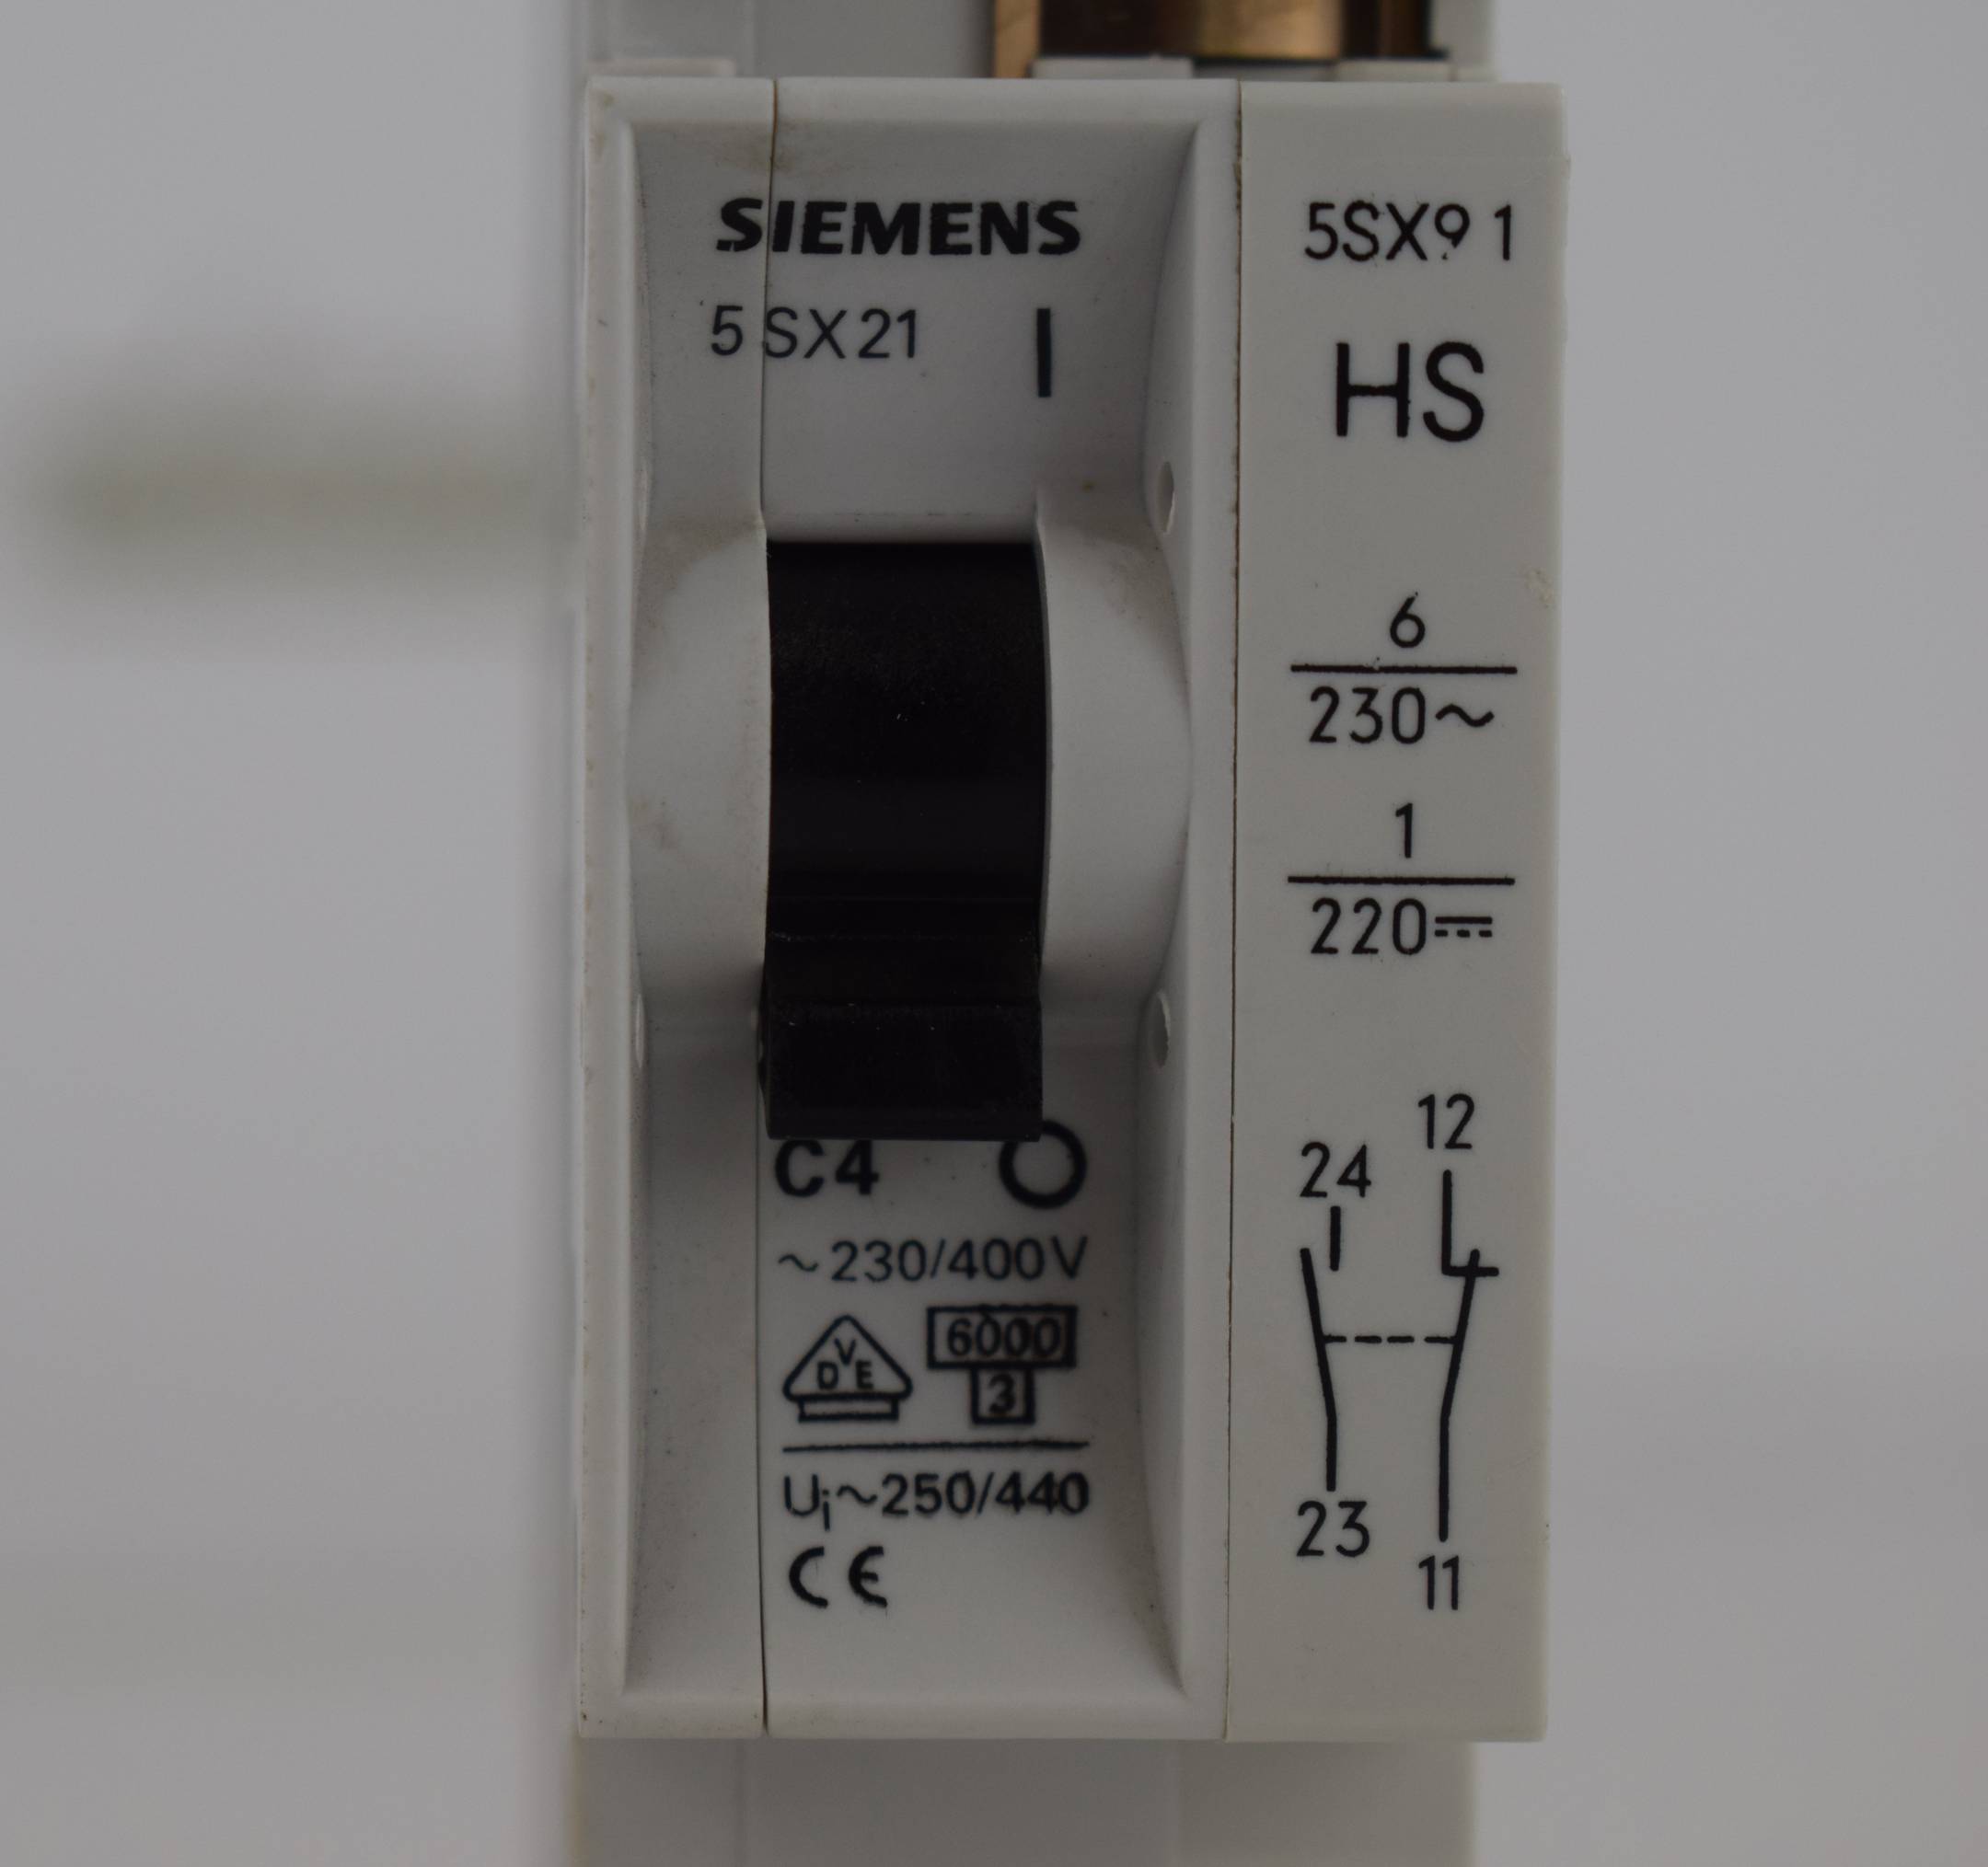 Siemens Leistungsschutzschalter 5SX21 C4 ( HS 5SX91 ) 